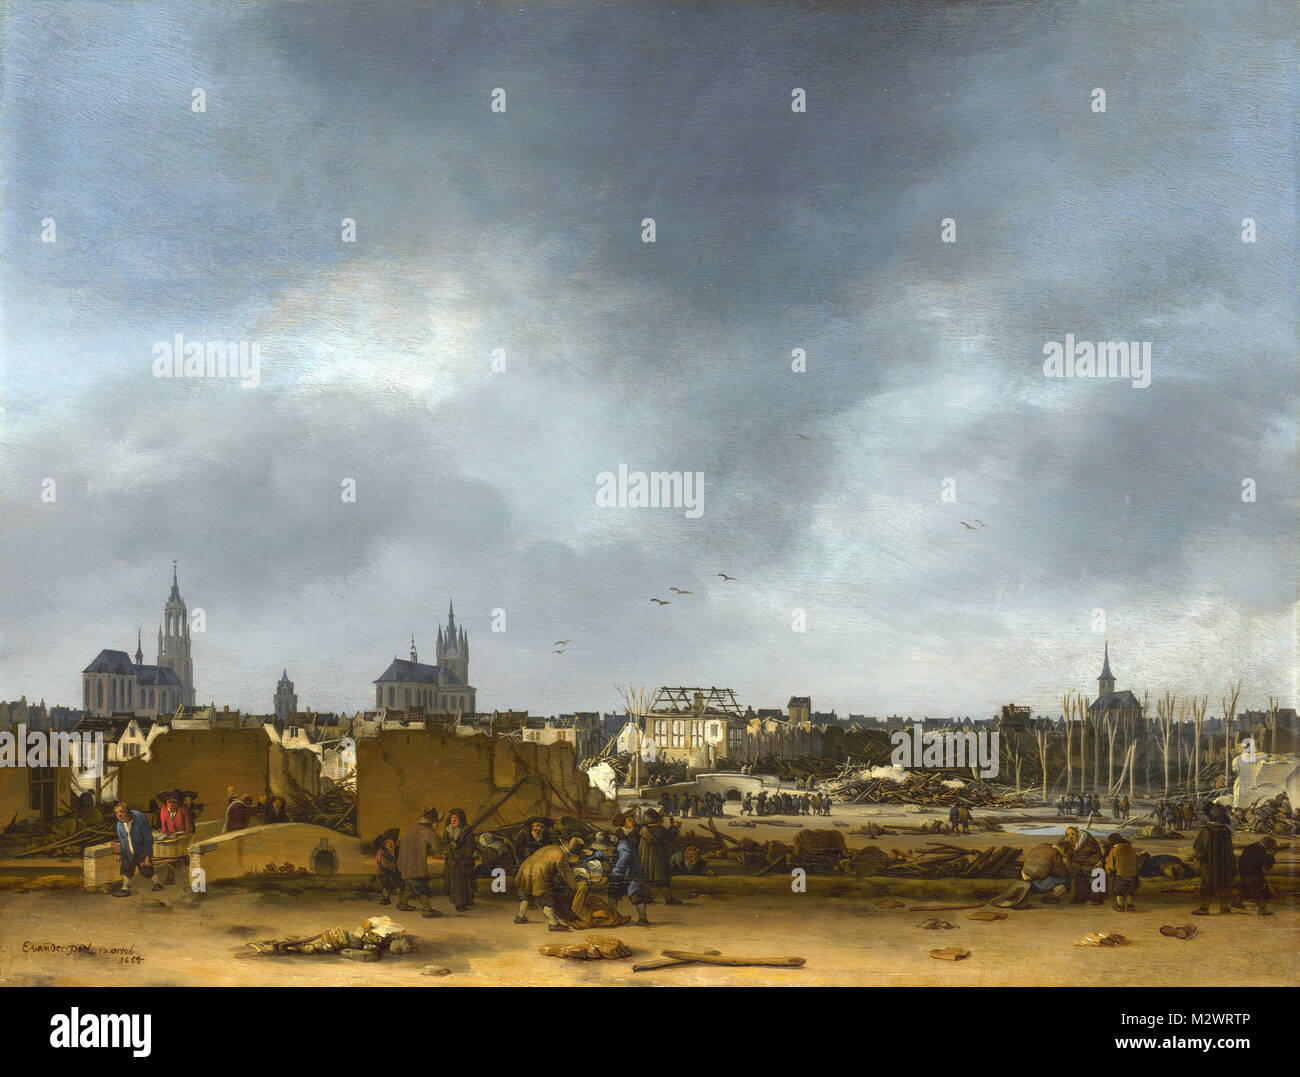 Johannes Vermeer, Egbert van der Poel : Une Vue de Delft après l'explosion de 1654 Banque D'Images